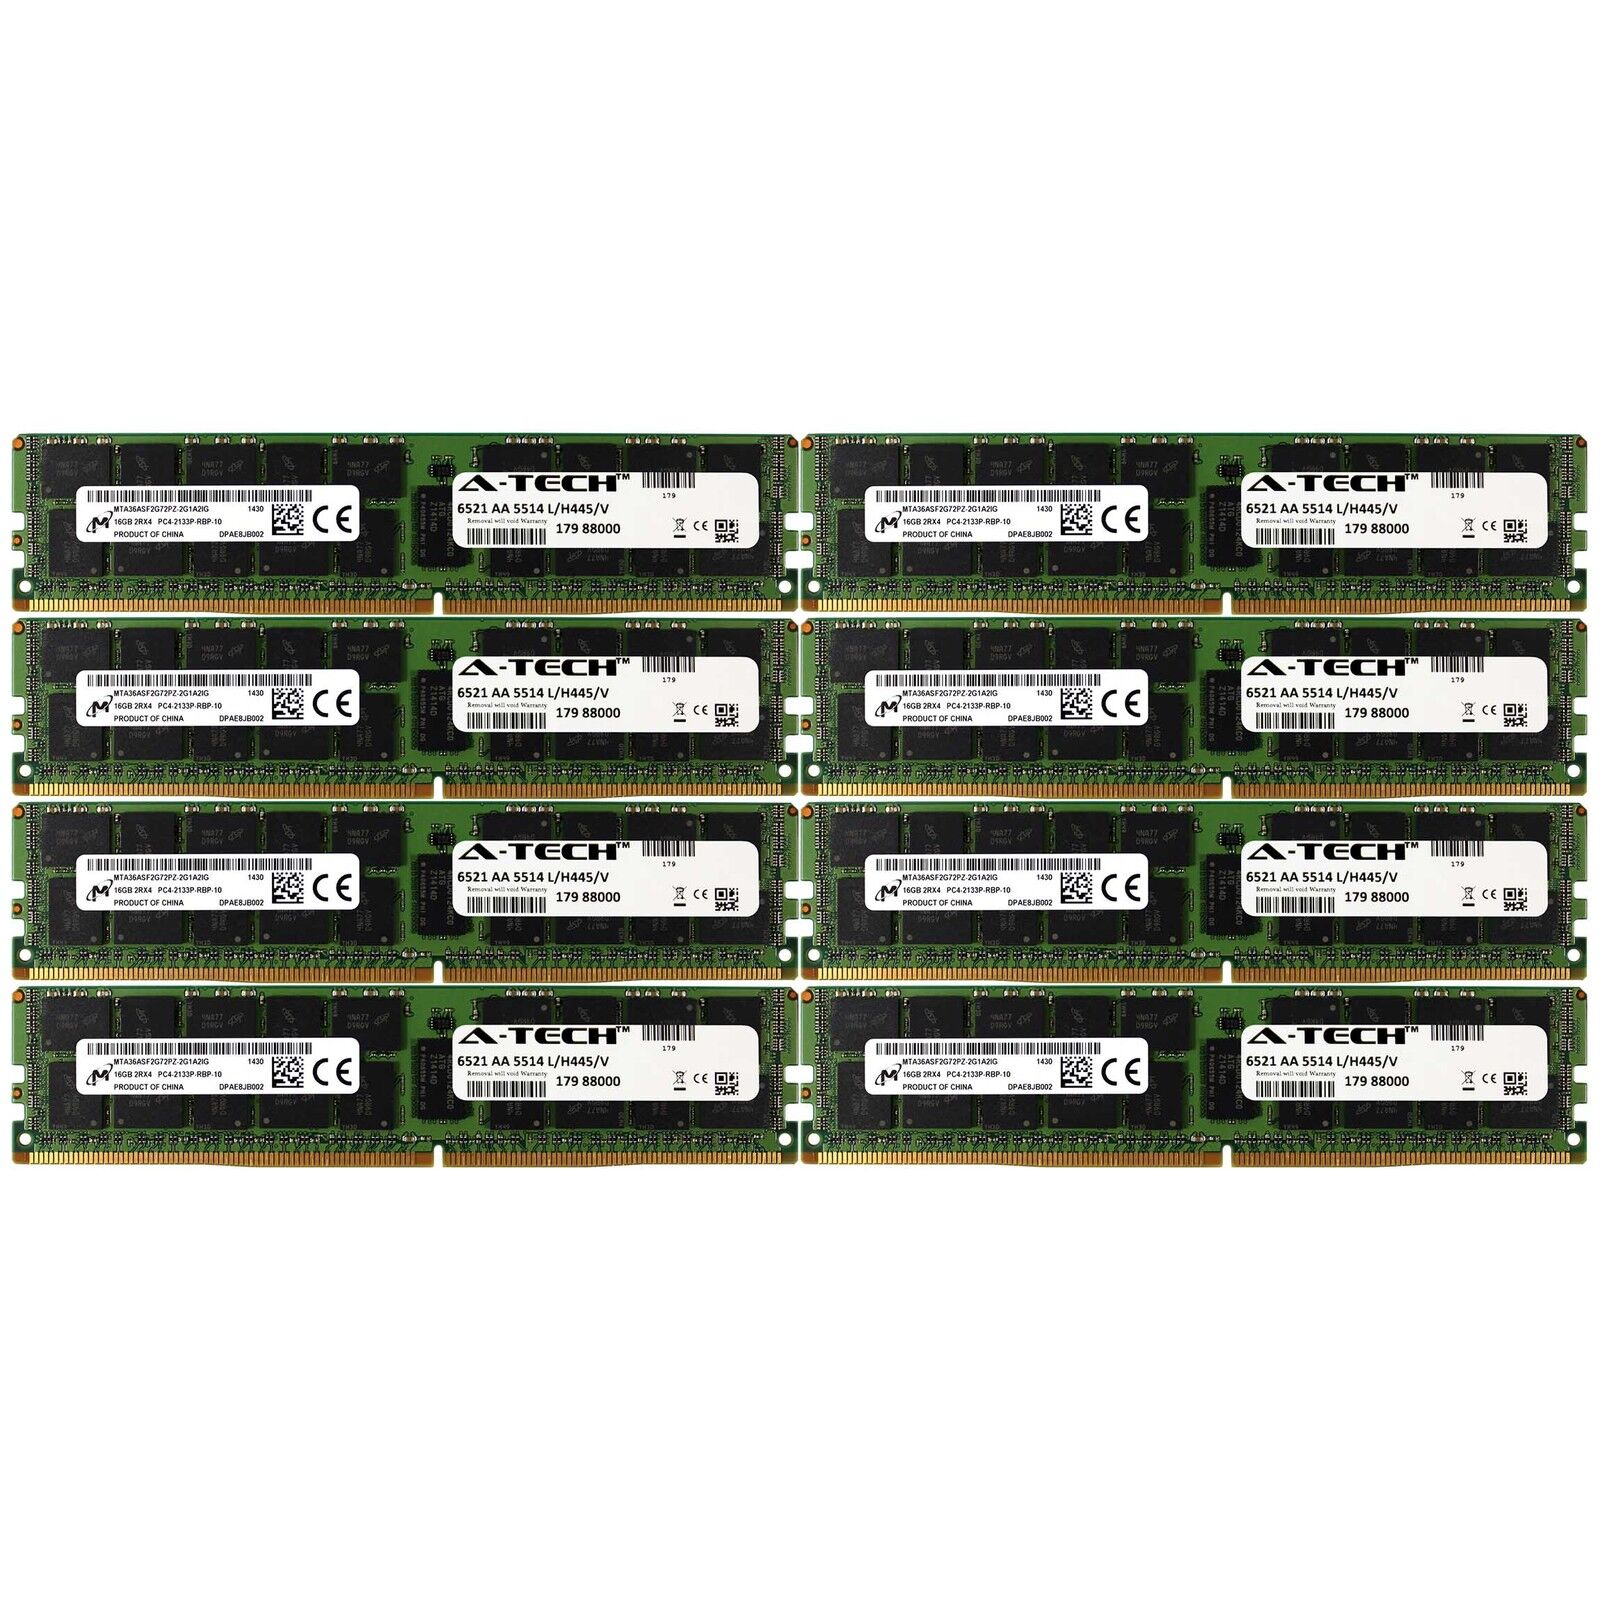 DDR4 2133MHz Micron 128GB Kit 8x 16GB HP Apollo 4500 4200 726719-B21 Memory RAM